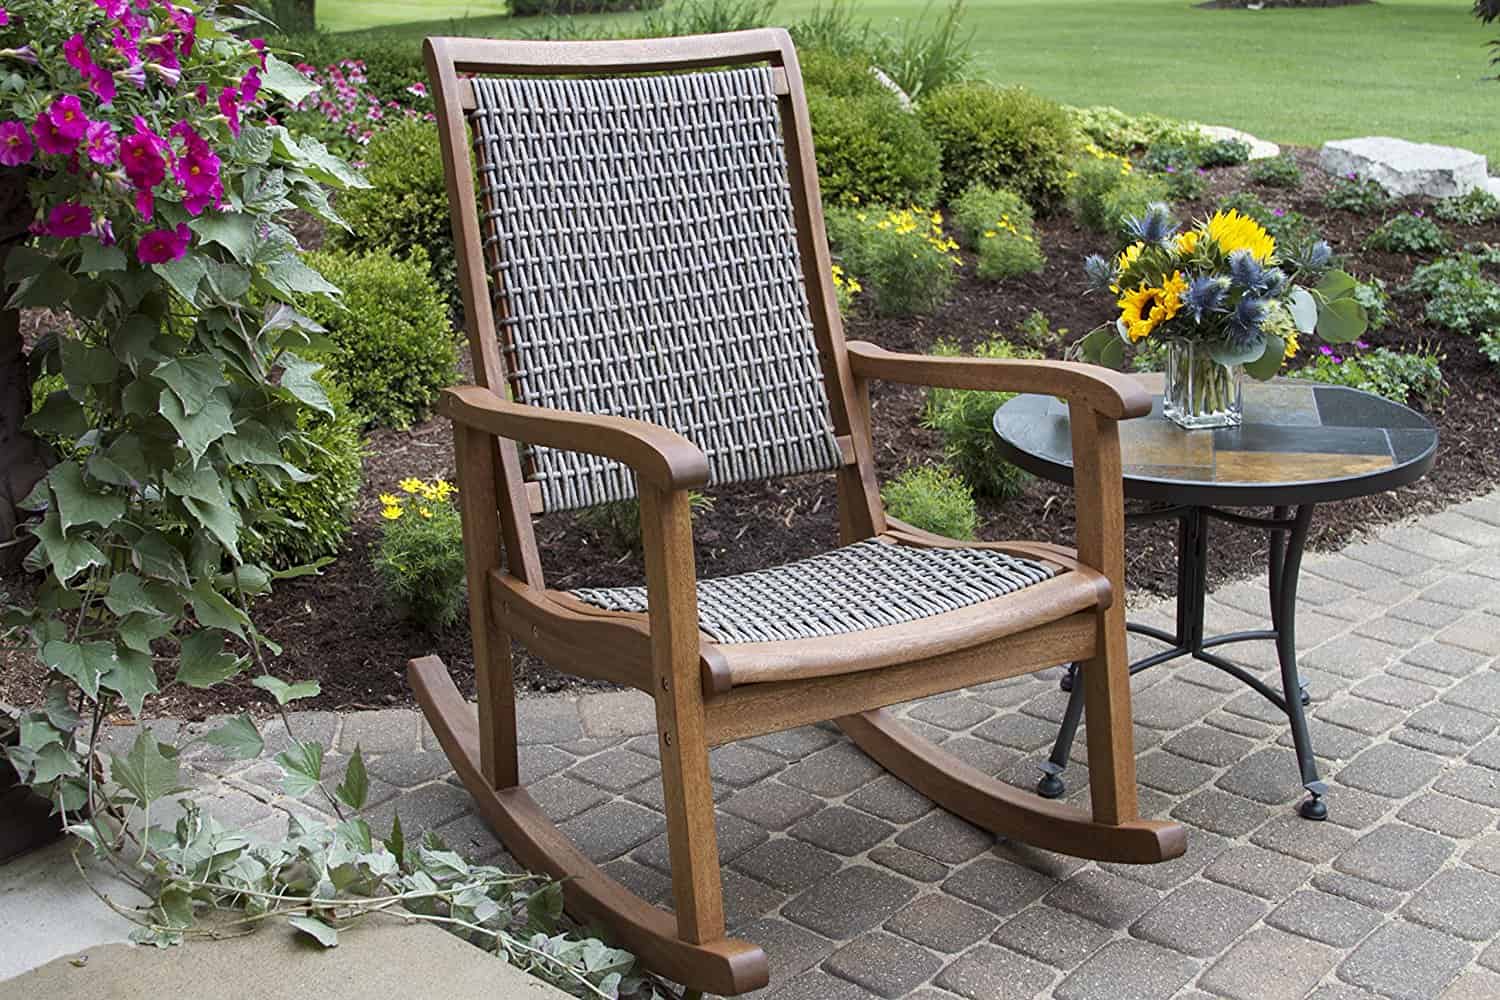 zenggp Porch Rocker Rocking Chair Sturdy Metal Arm Chair Outdoor Garden Furniture Rocking Seat Vintage Style,Green